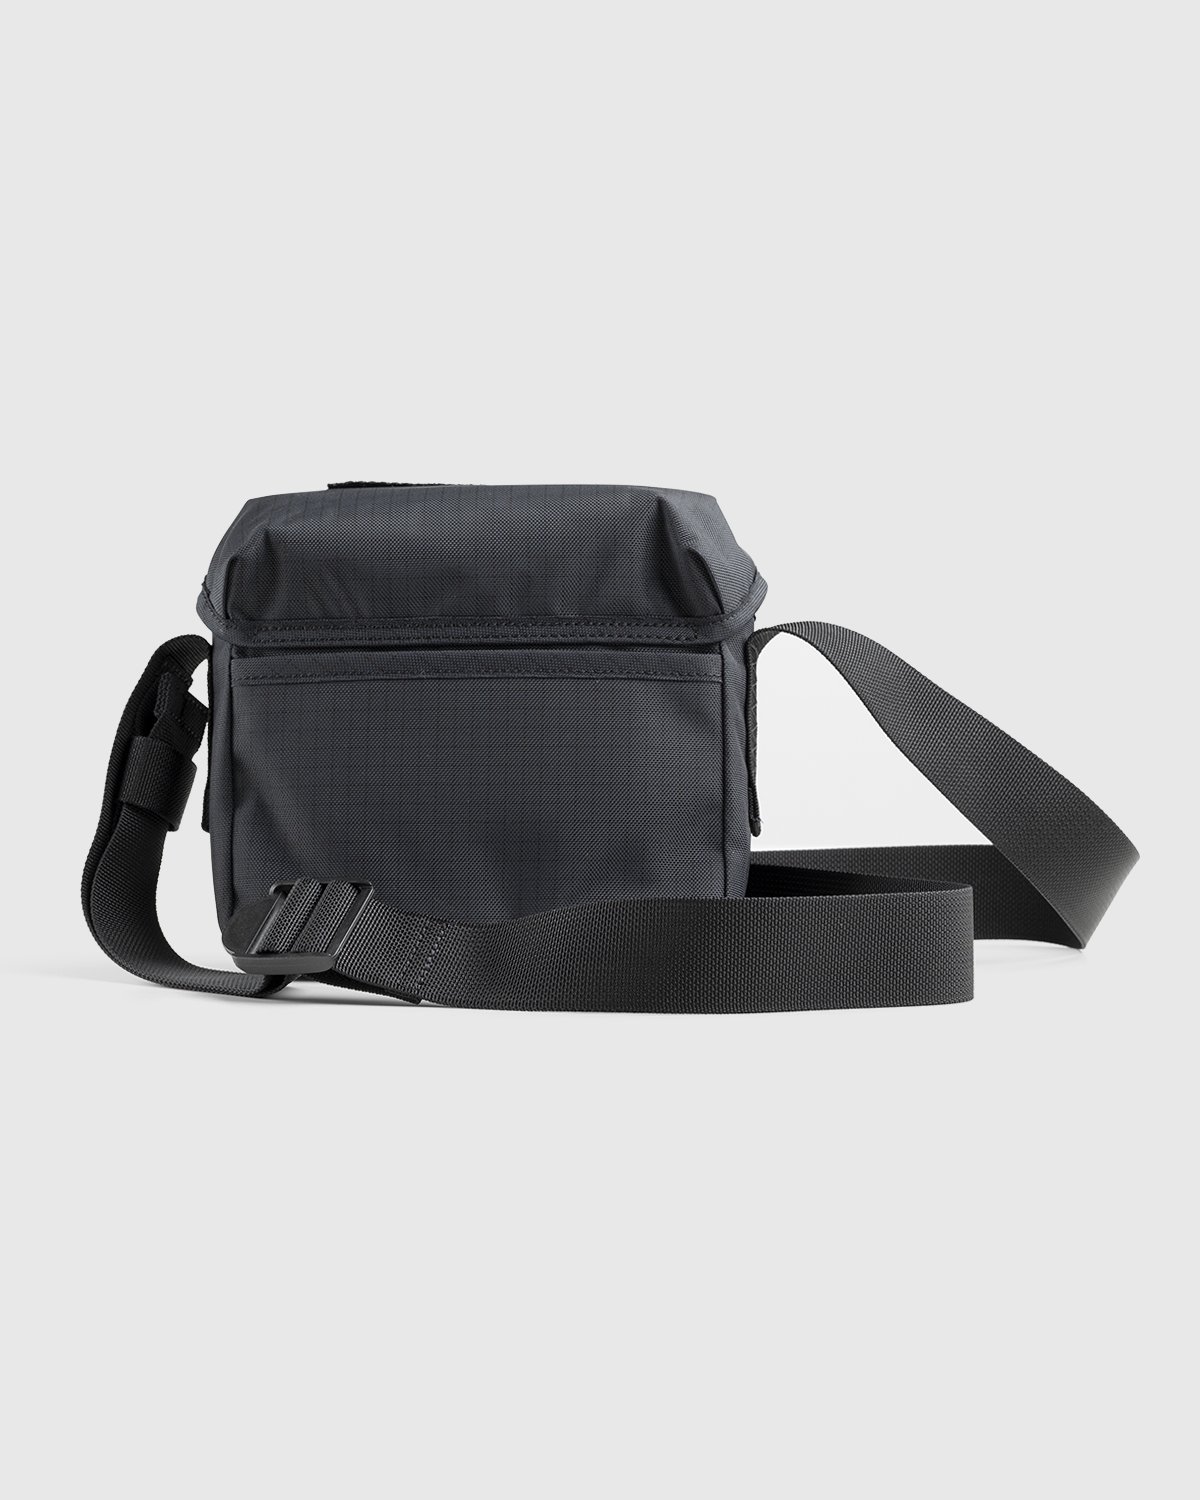 Acne Studios - Small Messenger Bag Black - Accessories - Black - Image 2